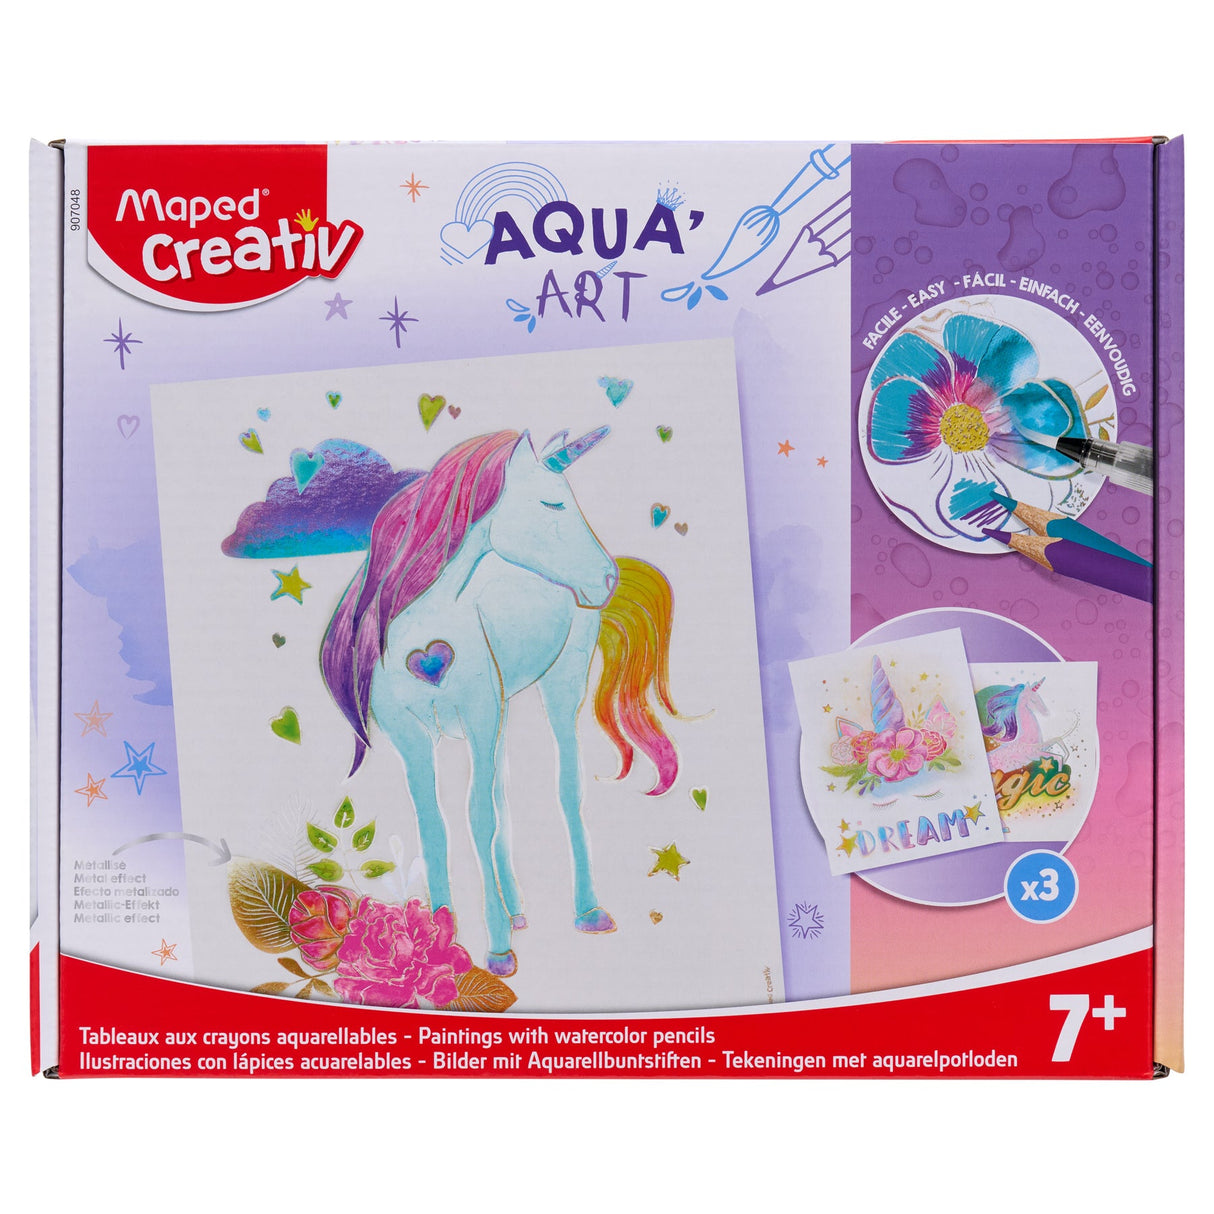 Maped Creativ Watercolour Aqua Art - Unicorns-Kids Art Sets-Maped|StationeryShop.co.uk